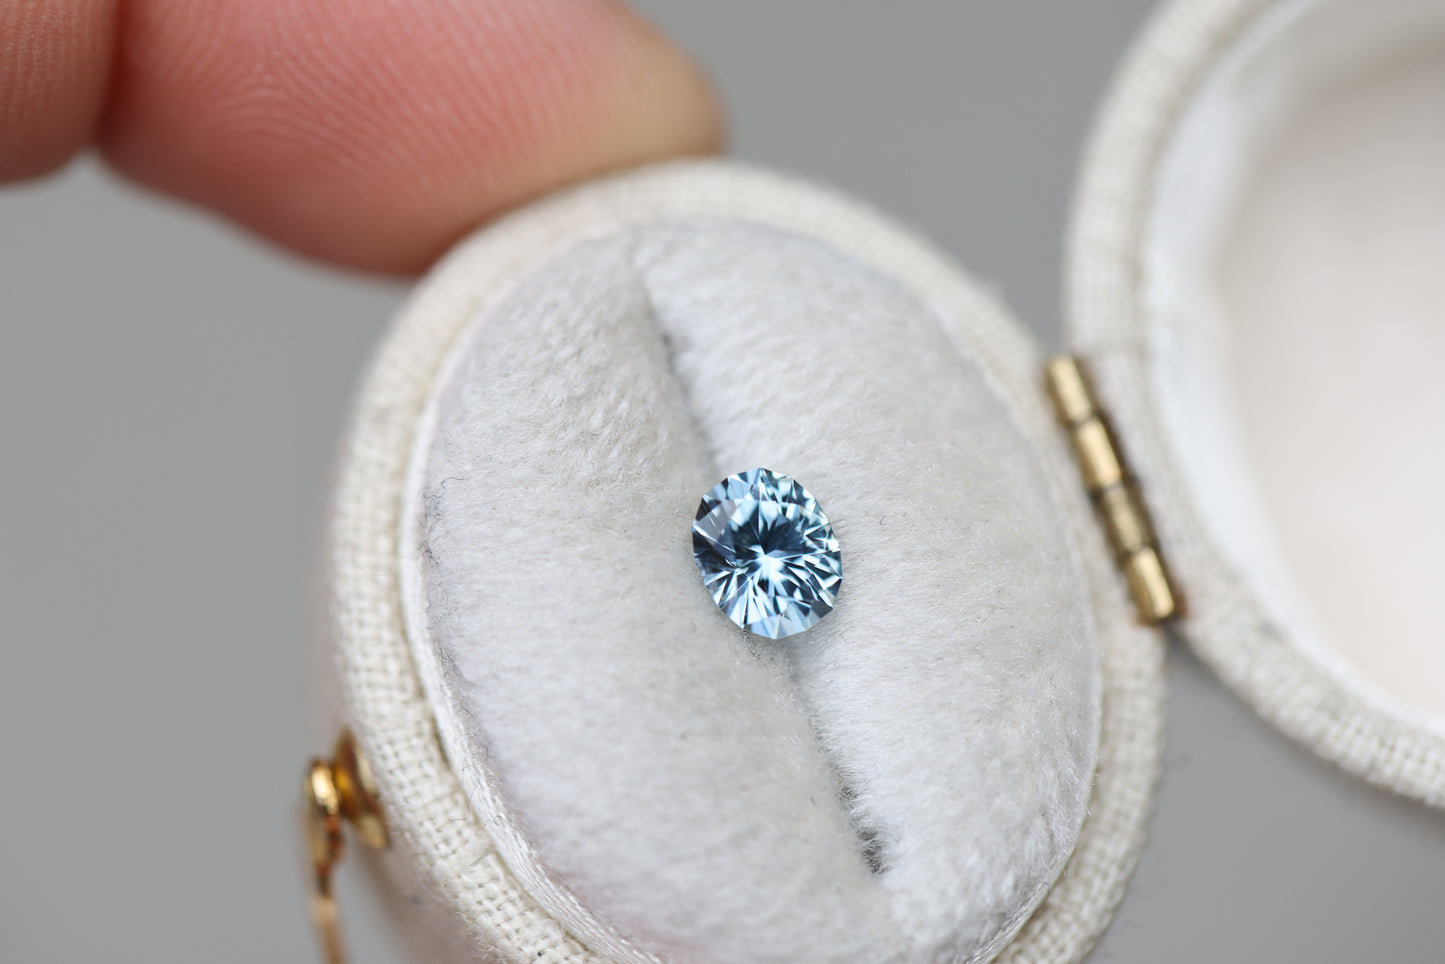 .77ct oval blue sapphire - Earth's Treasury